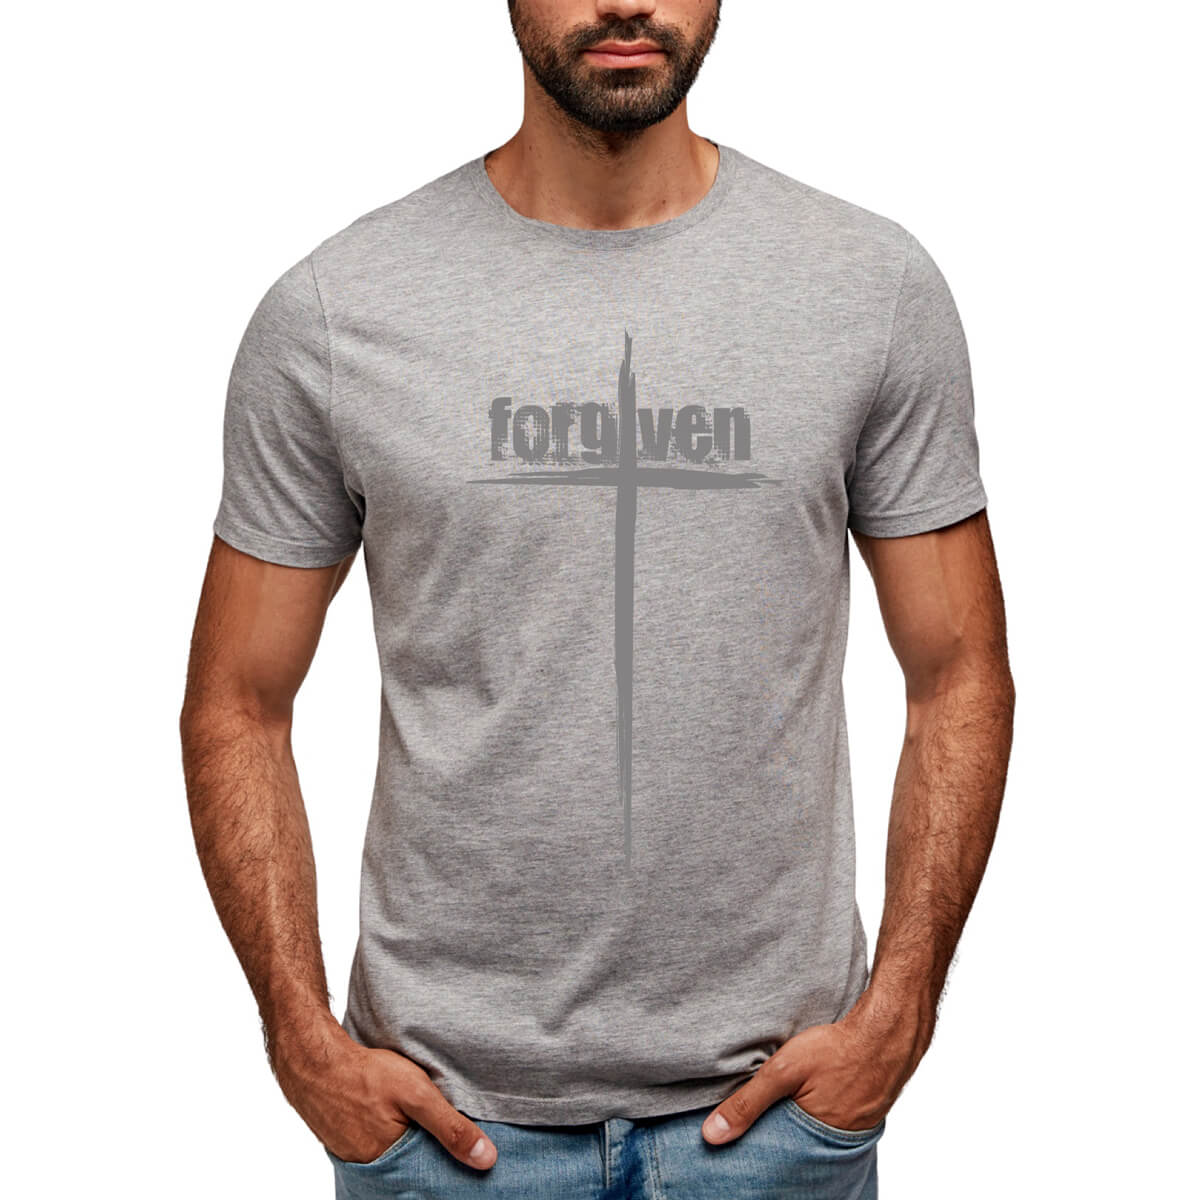 Forgiven Cross Men's T-Shirt